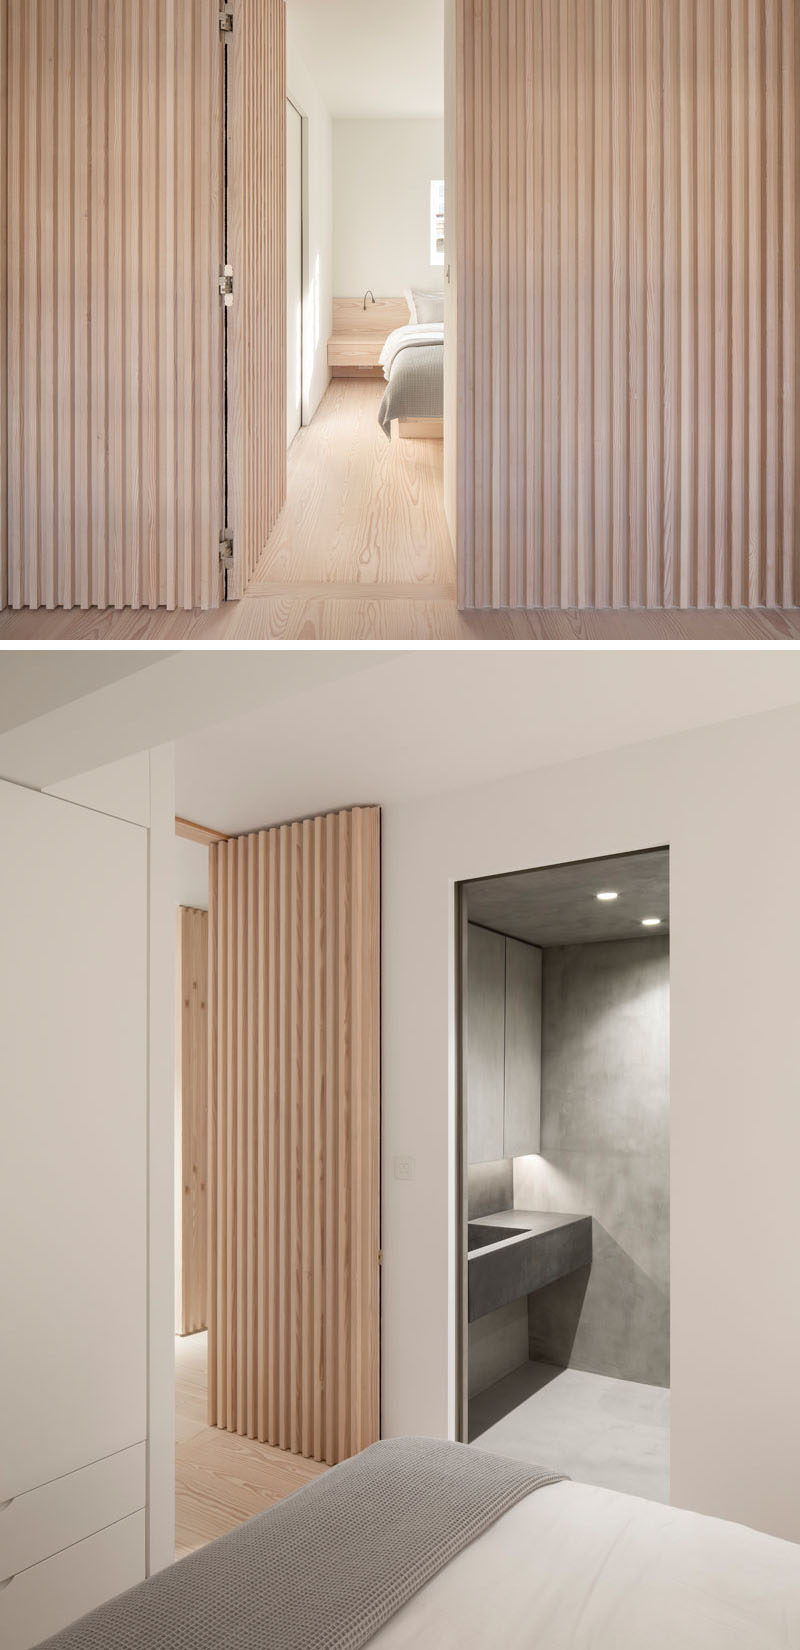 Interior Design Ideas This Wood Batten Wall Provides A